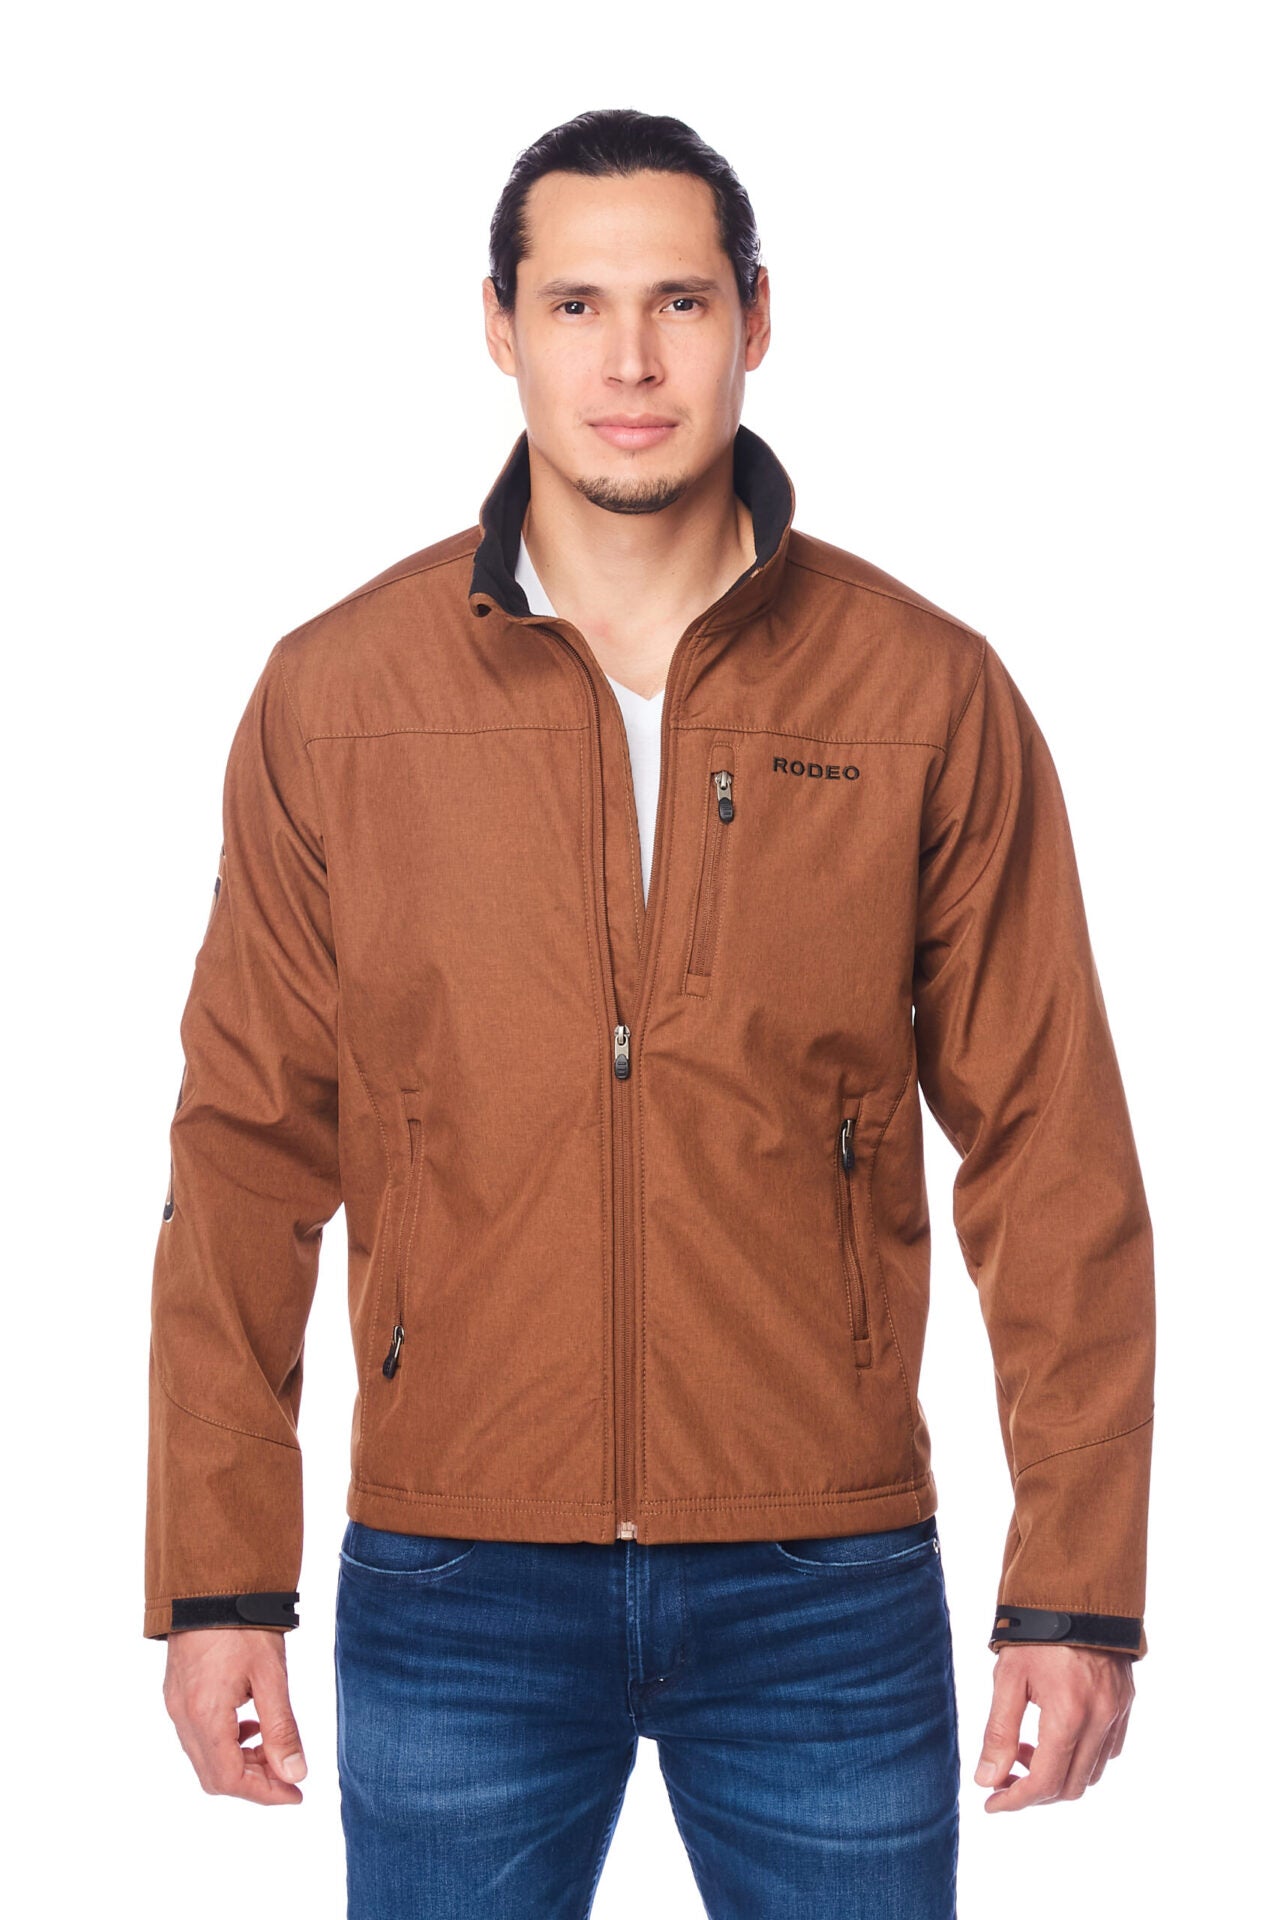 Ash City Bonded Fleece 88660 - Evoke Men's Bonded Fleece Jacket